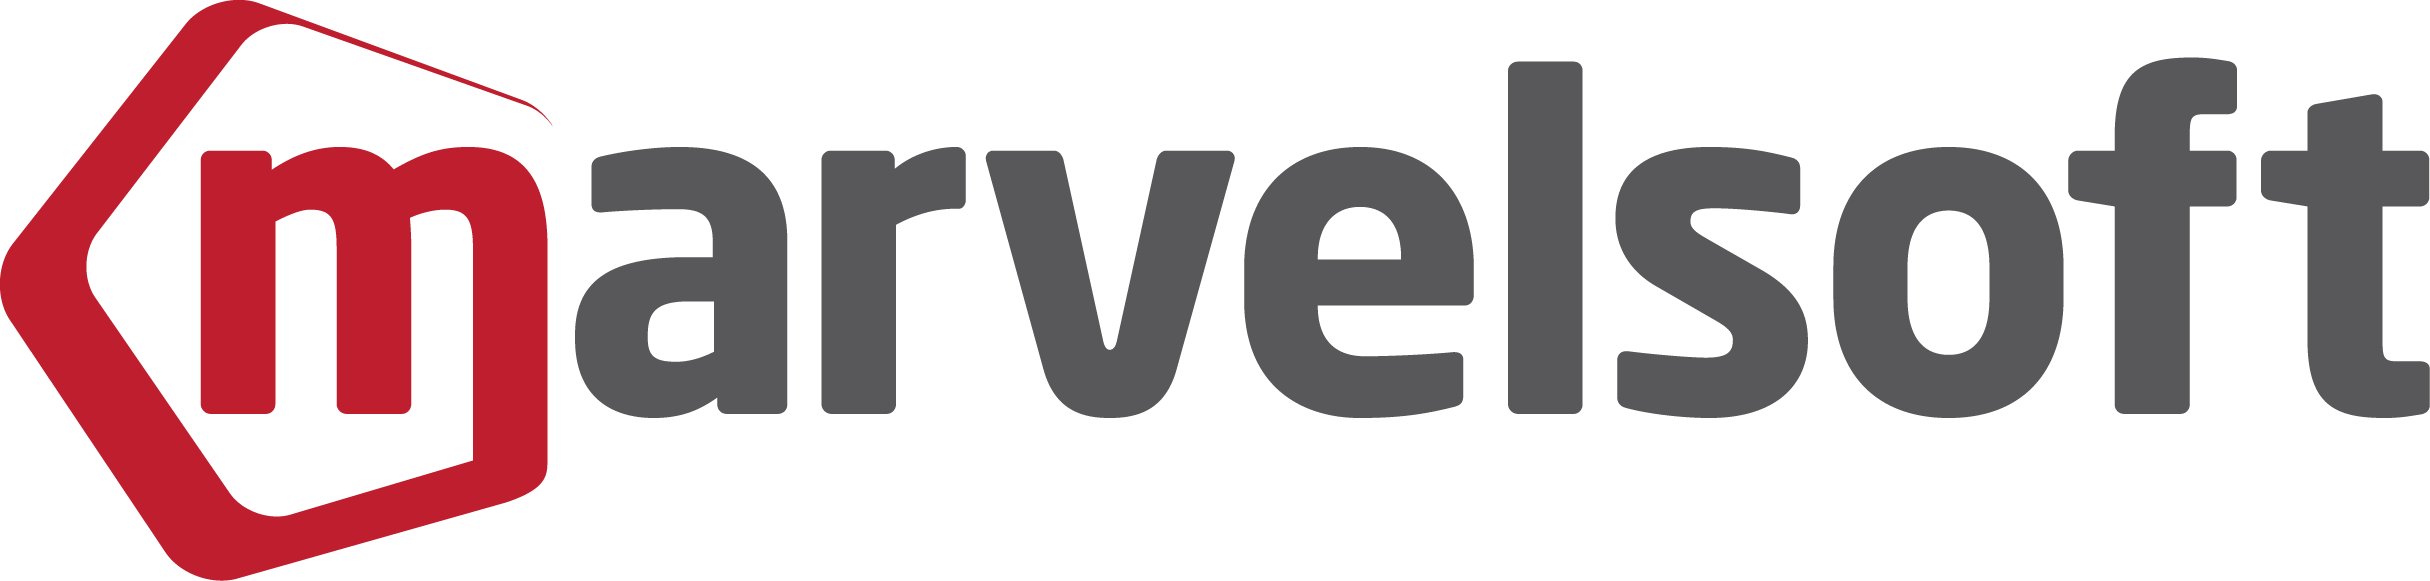 Marvelsoft logo